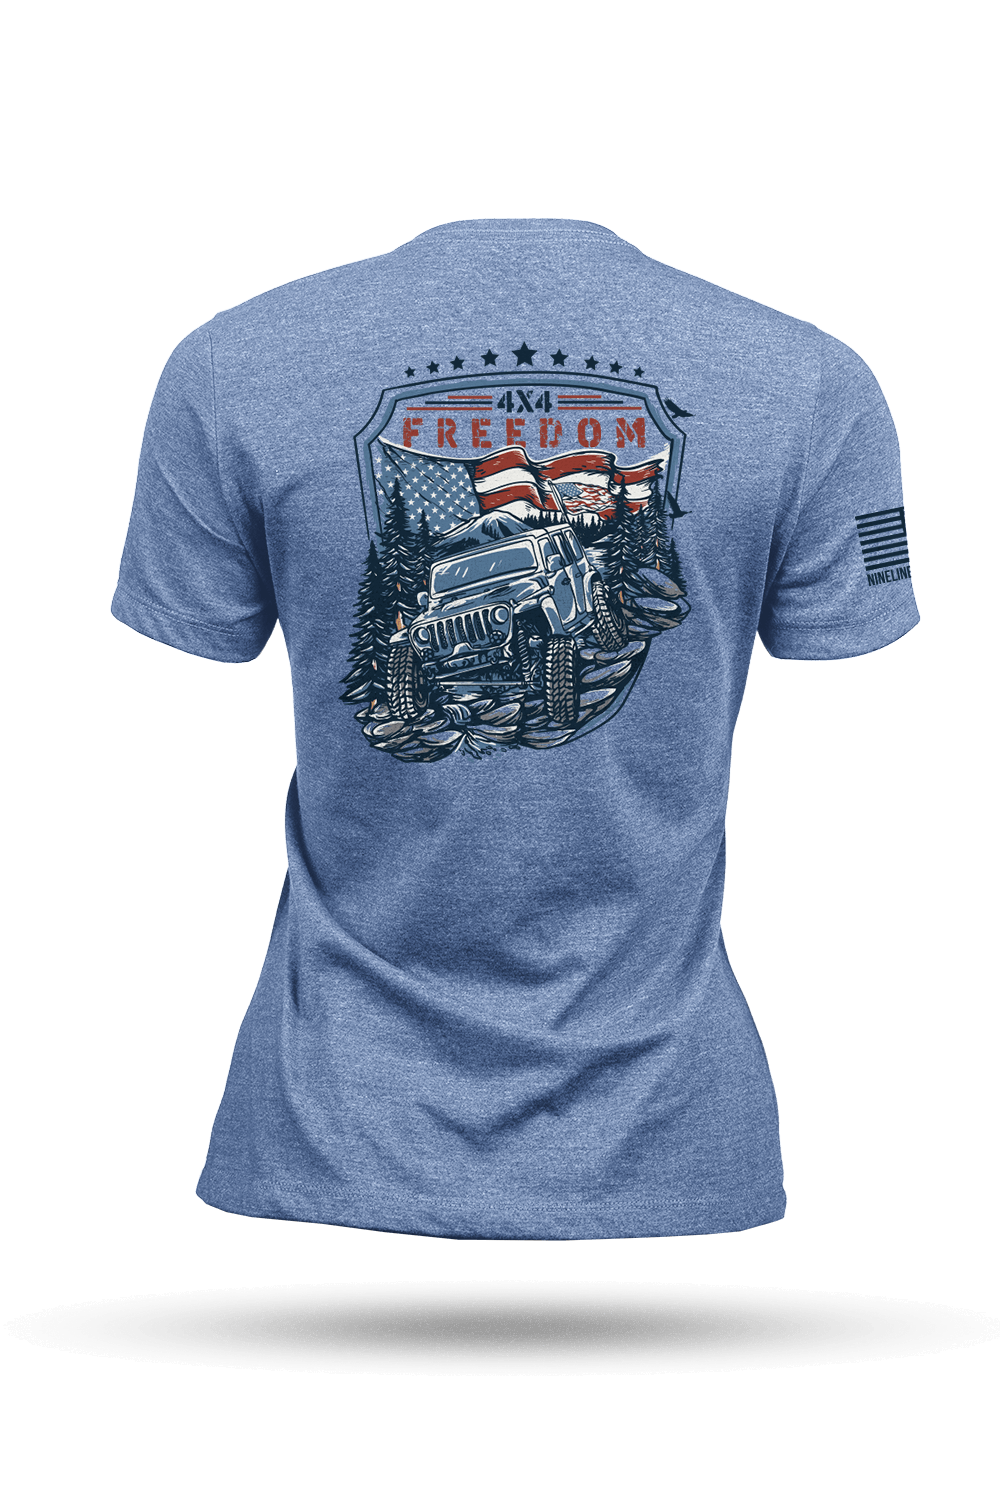 Women's T - Shirt - 4x4 Freedom